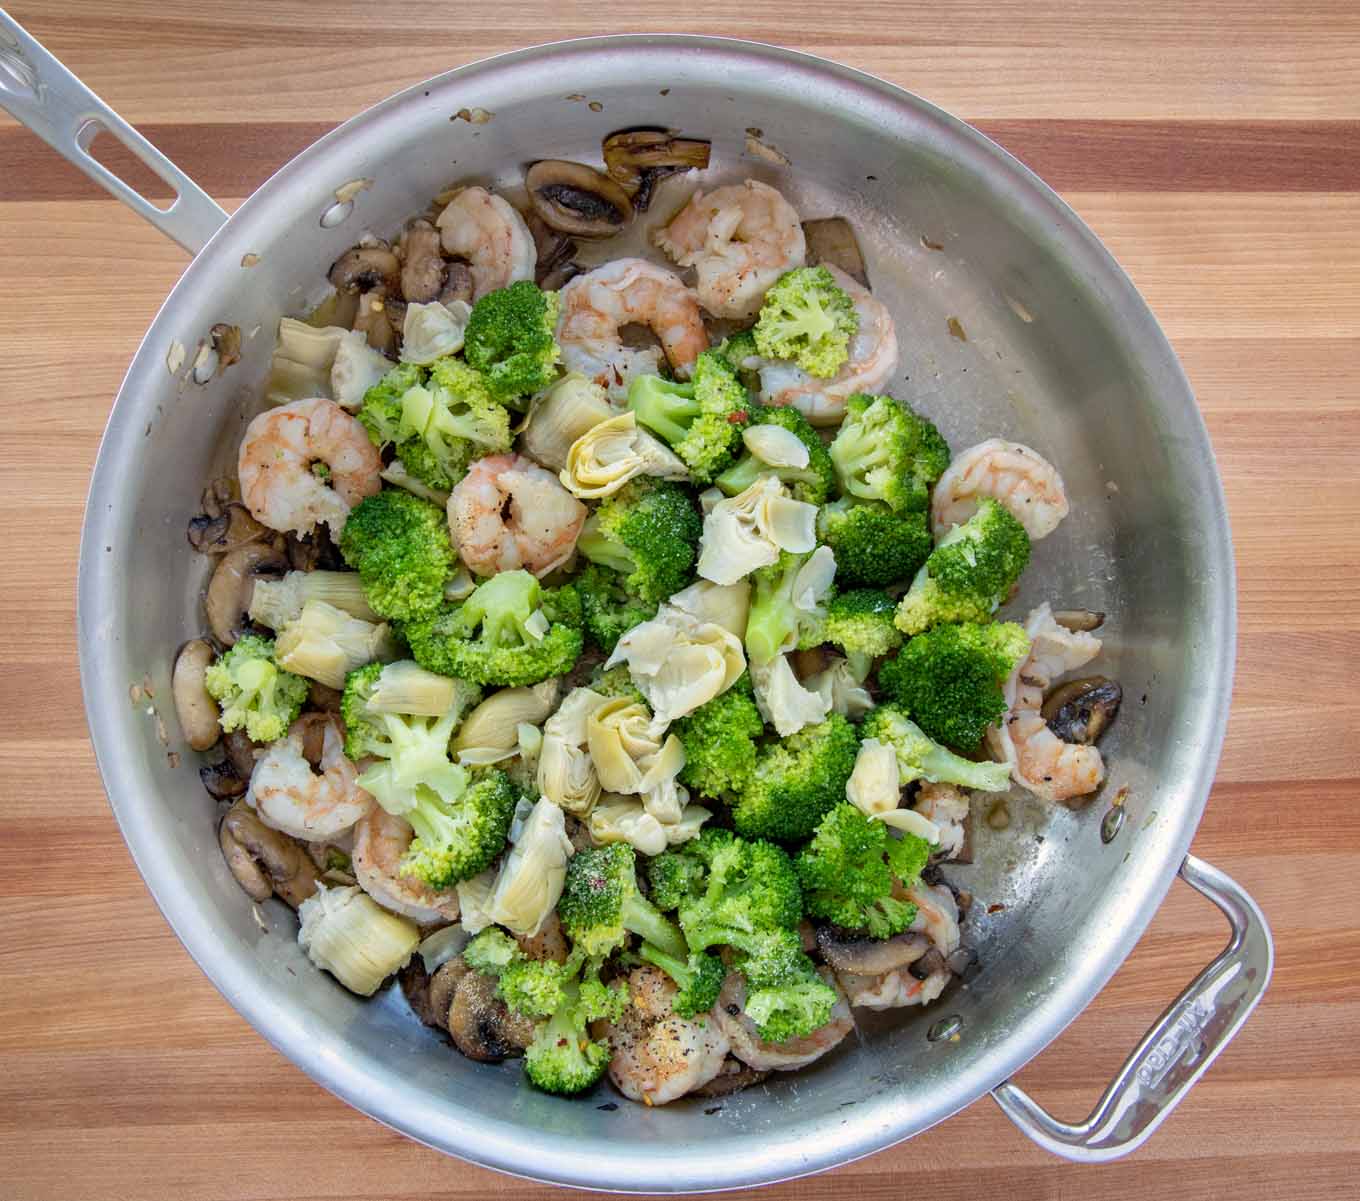 saute pan with mushrooms, shrimp, broccoli and artichoke hearts